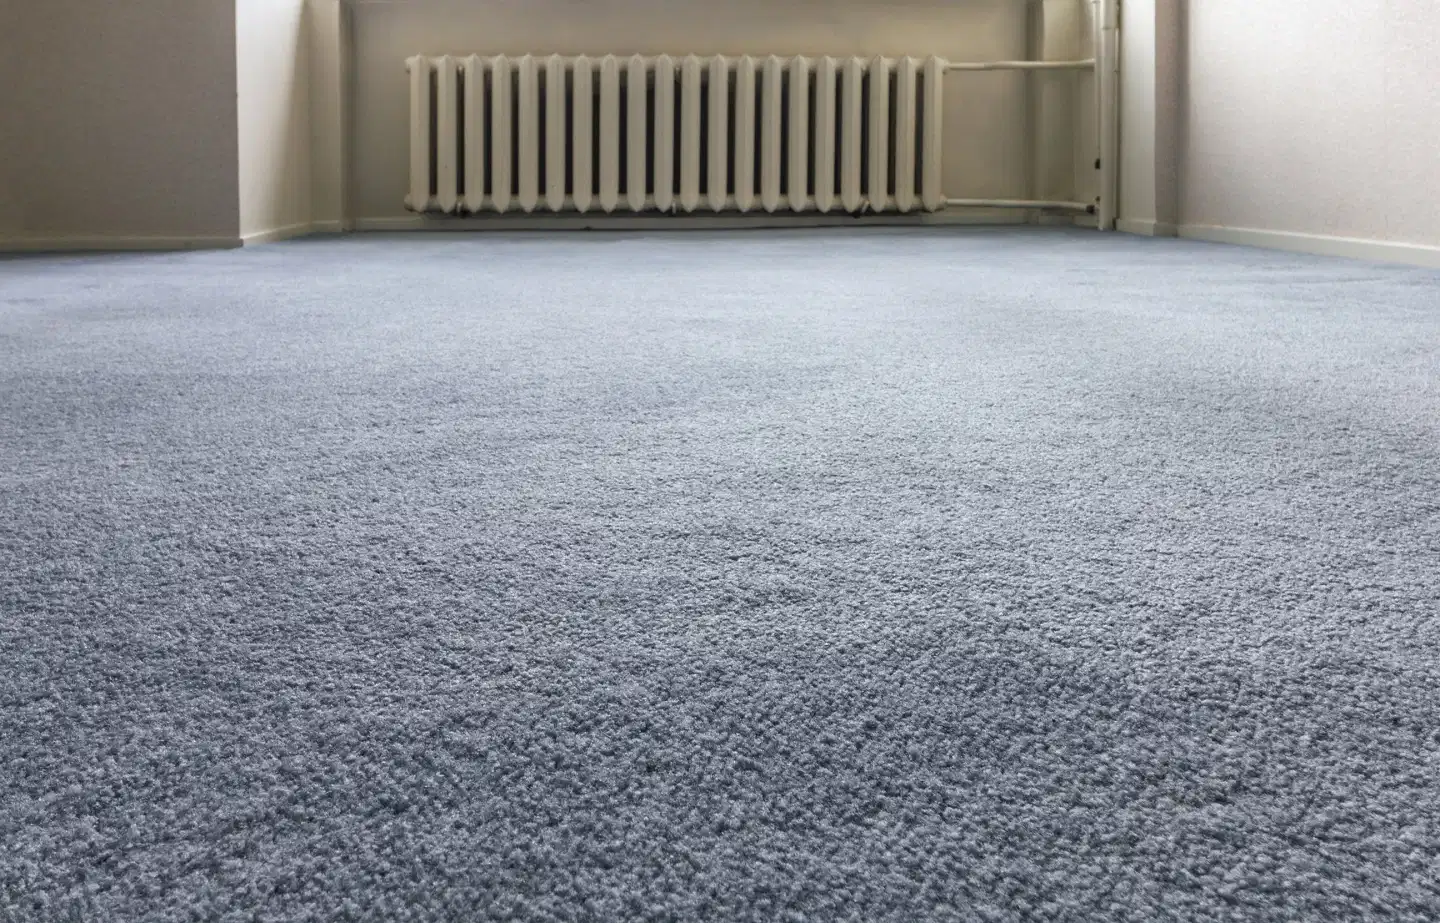 Carpet Garage Flooring: Comfortable and Economical